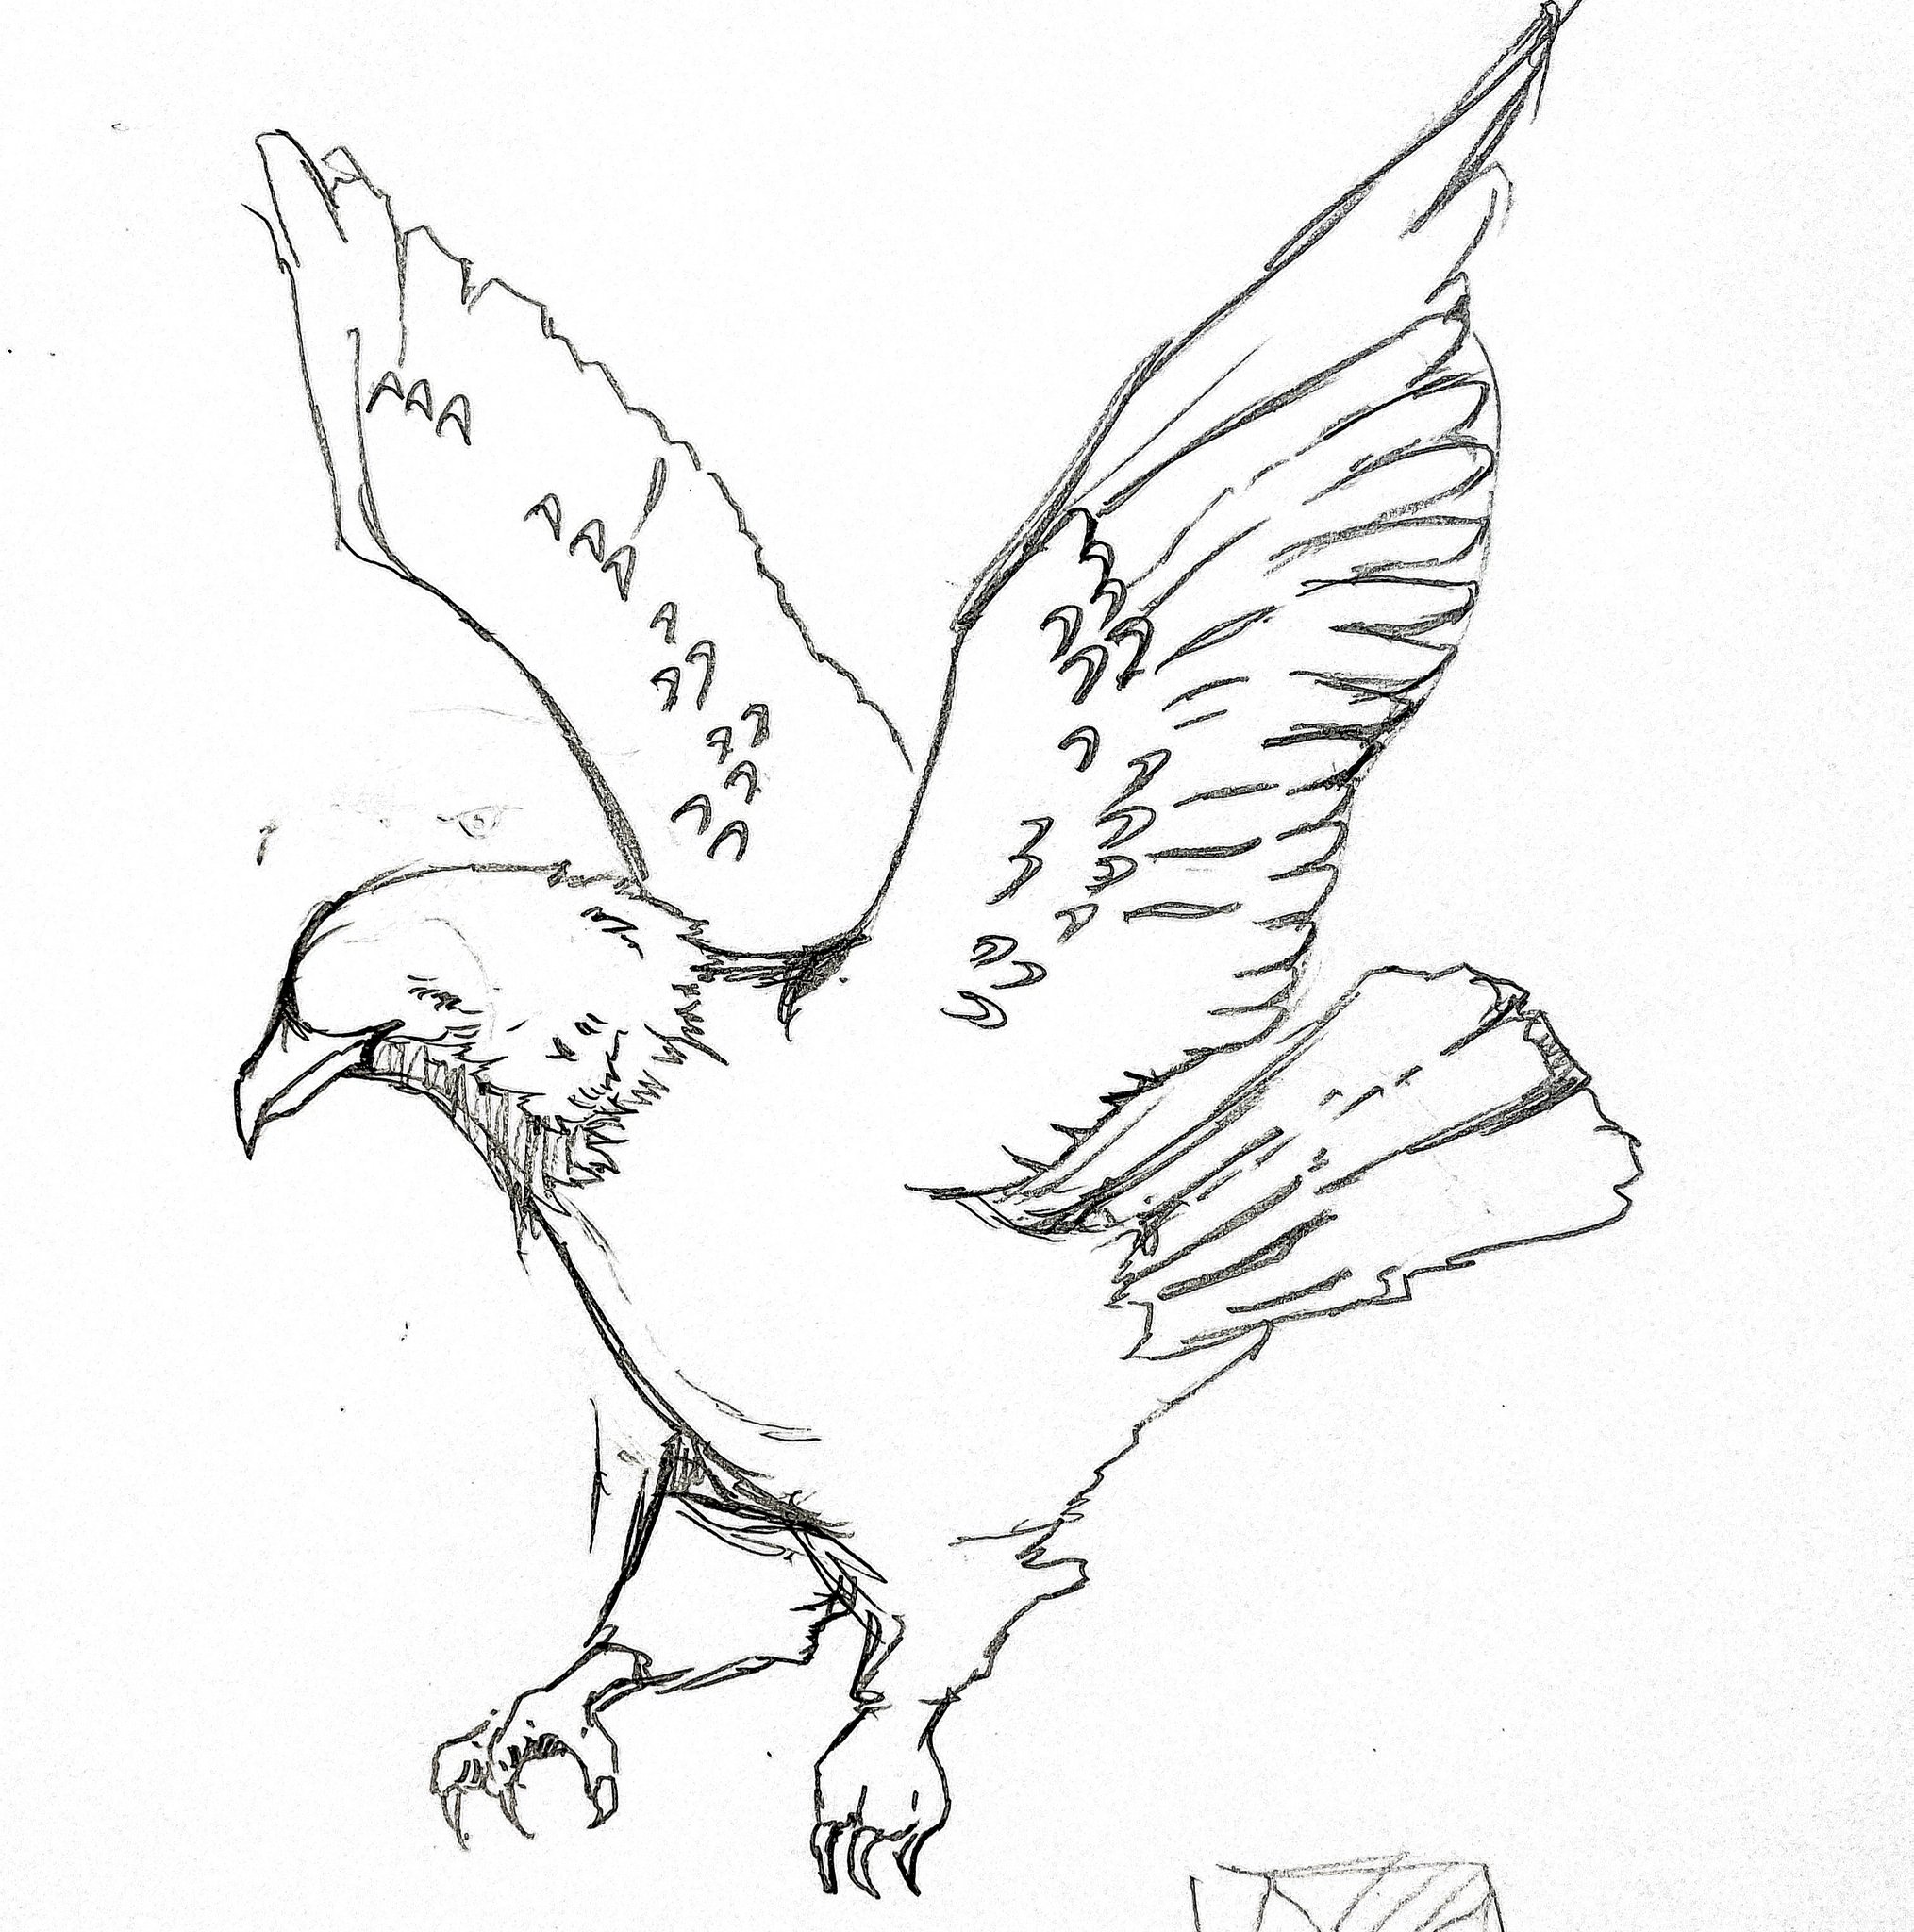 Nexus Travadesign マスロゴ依頼ok たまにはリアルな鷲を描きましょう 落書き イラスト T Co 1fglu4hooe Twitter